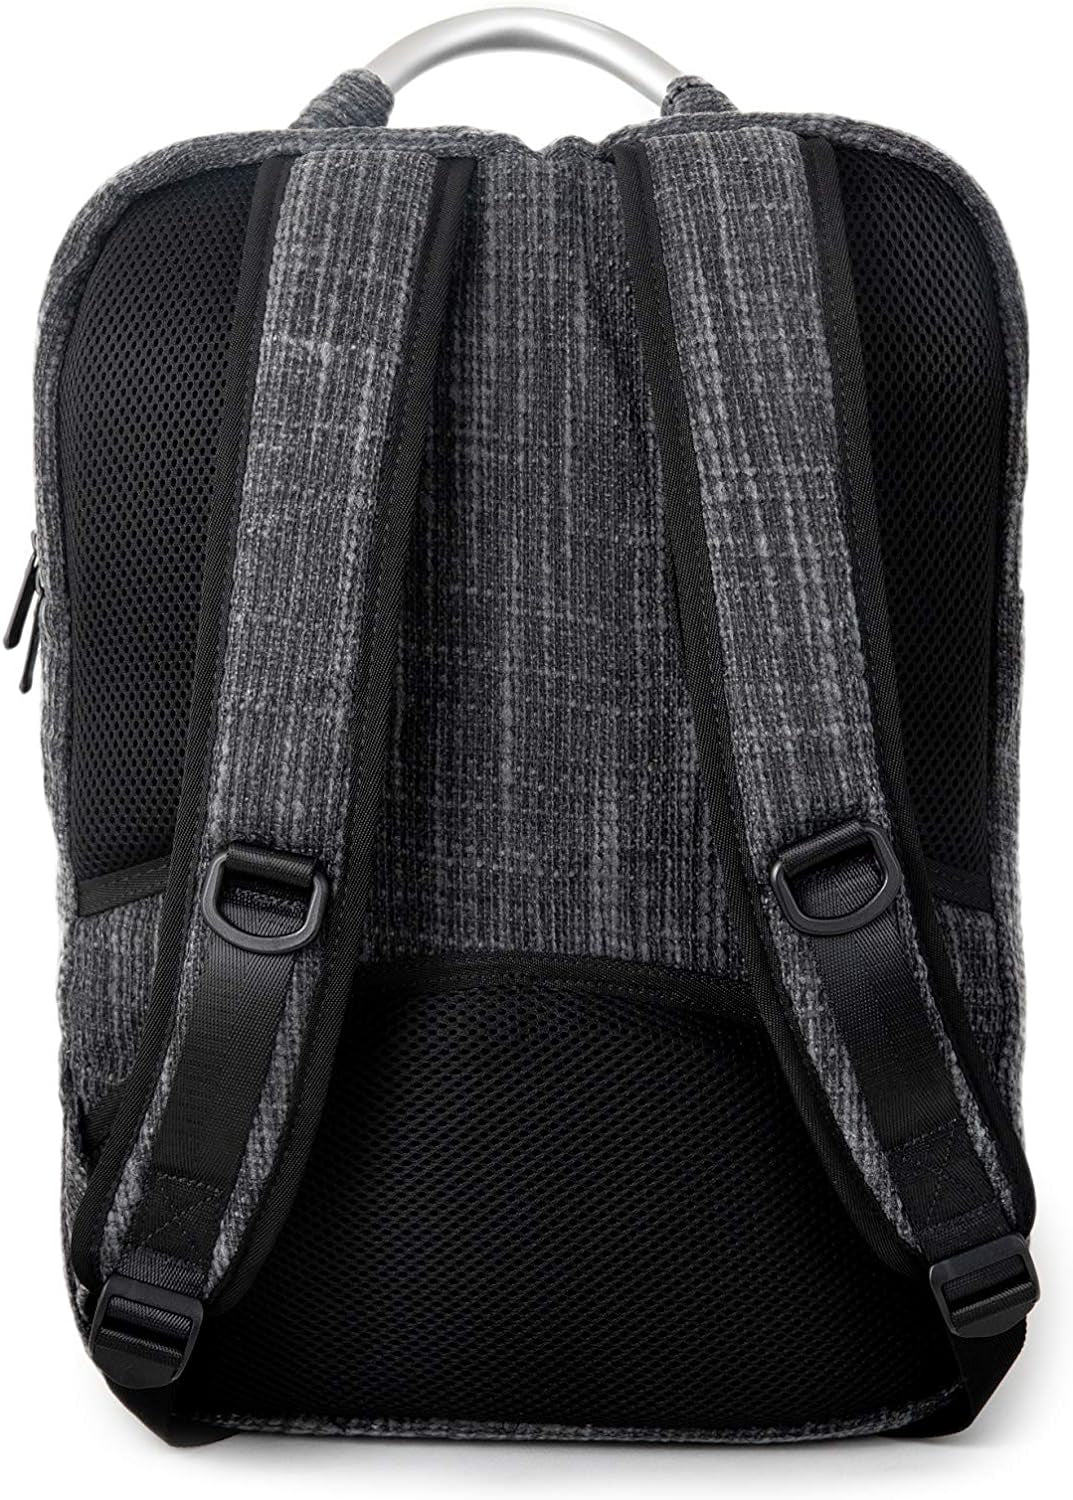 Slab Bag Hemp Backpack with Padded Laptop Compartment and Secret Pocket